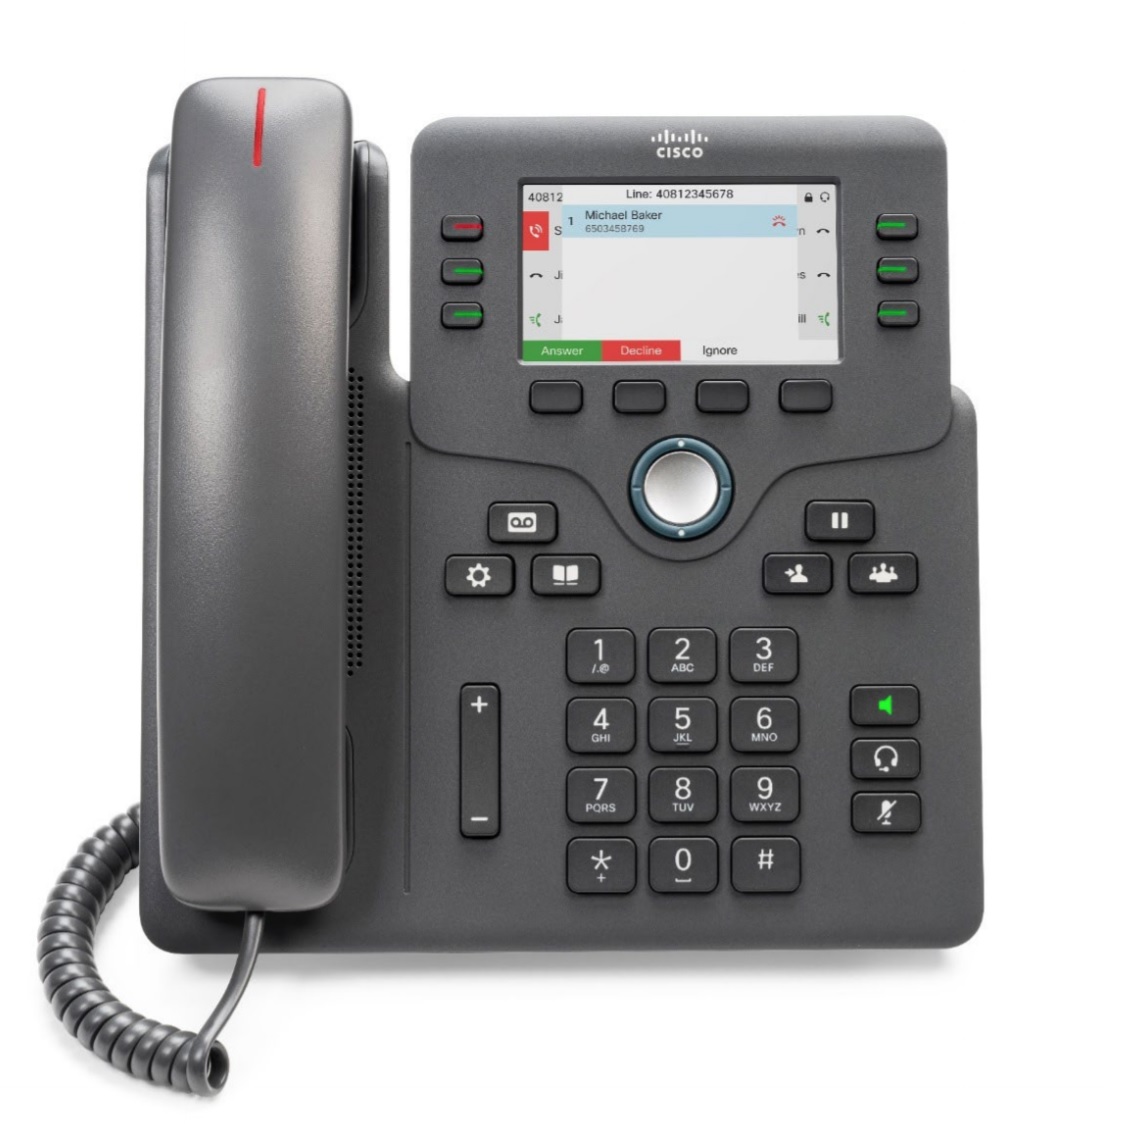 Cisco IP Phone 6871 POE, Gigabit PC Port, 6 Line SIP, Color Disply with Multiplatform Firmware